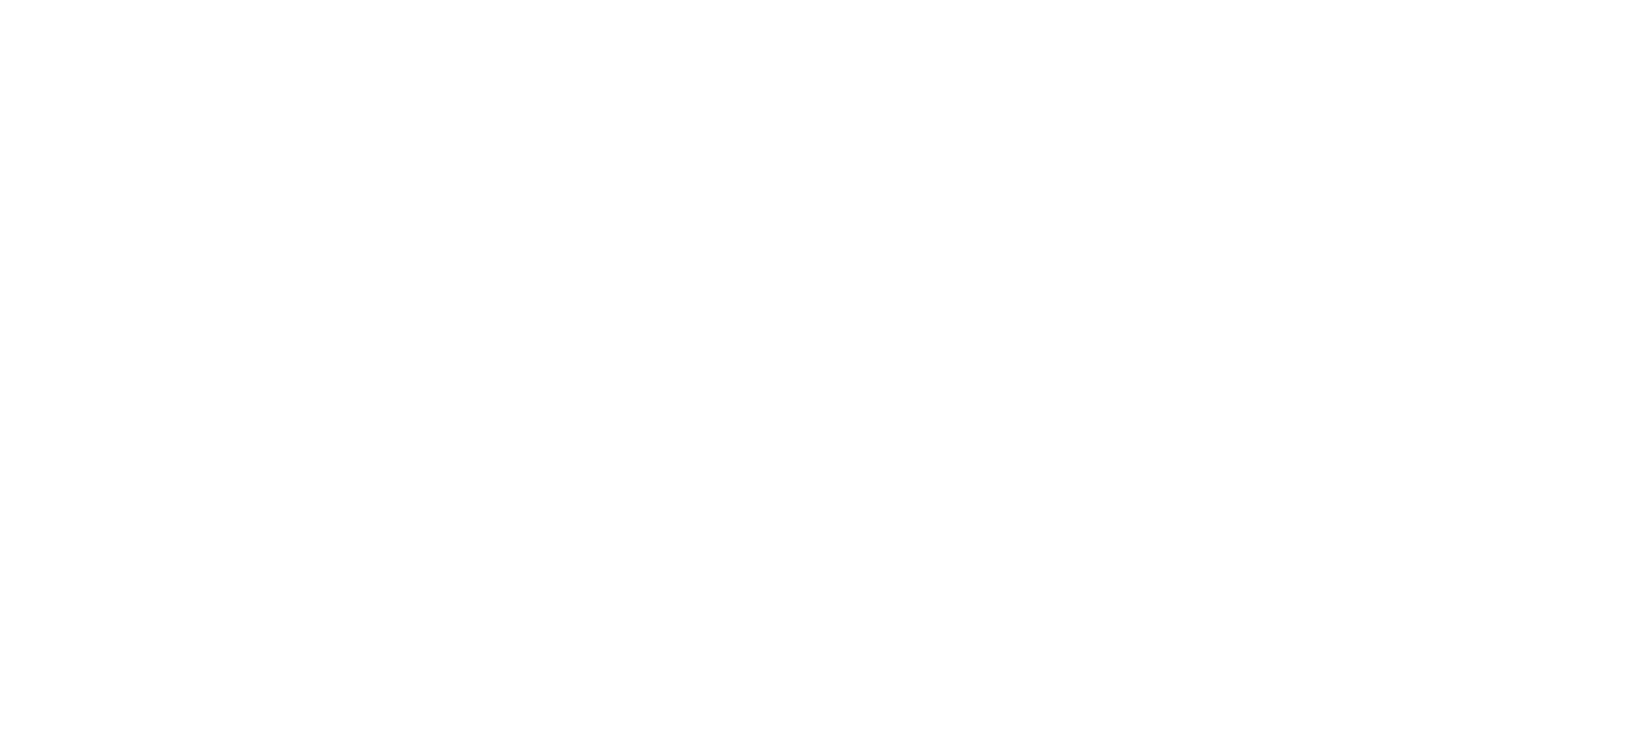 jebbit logo